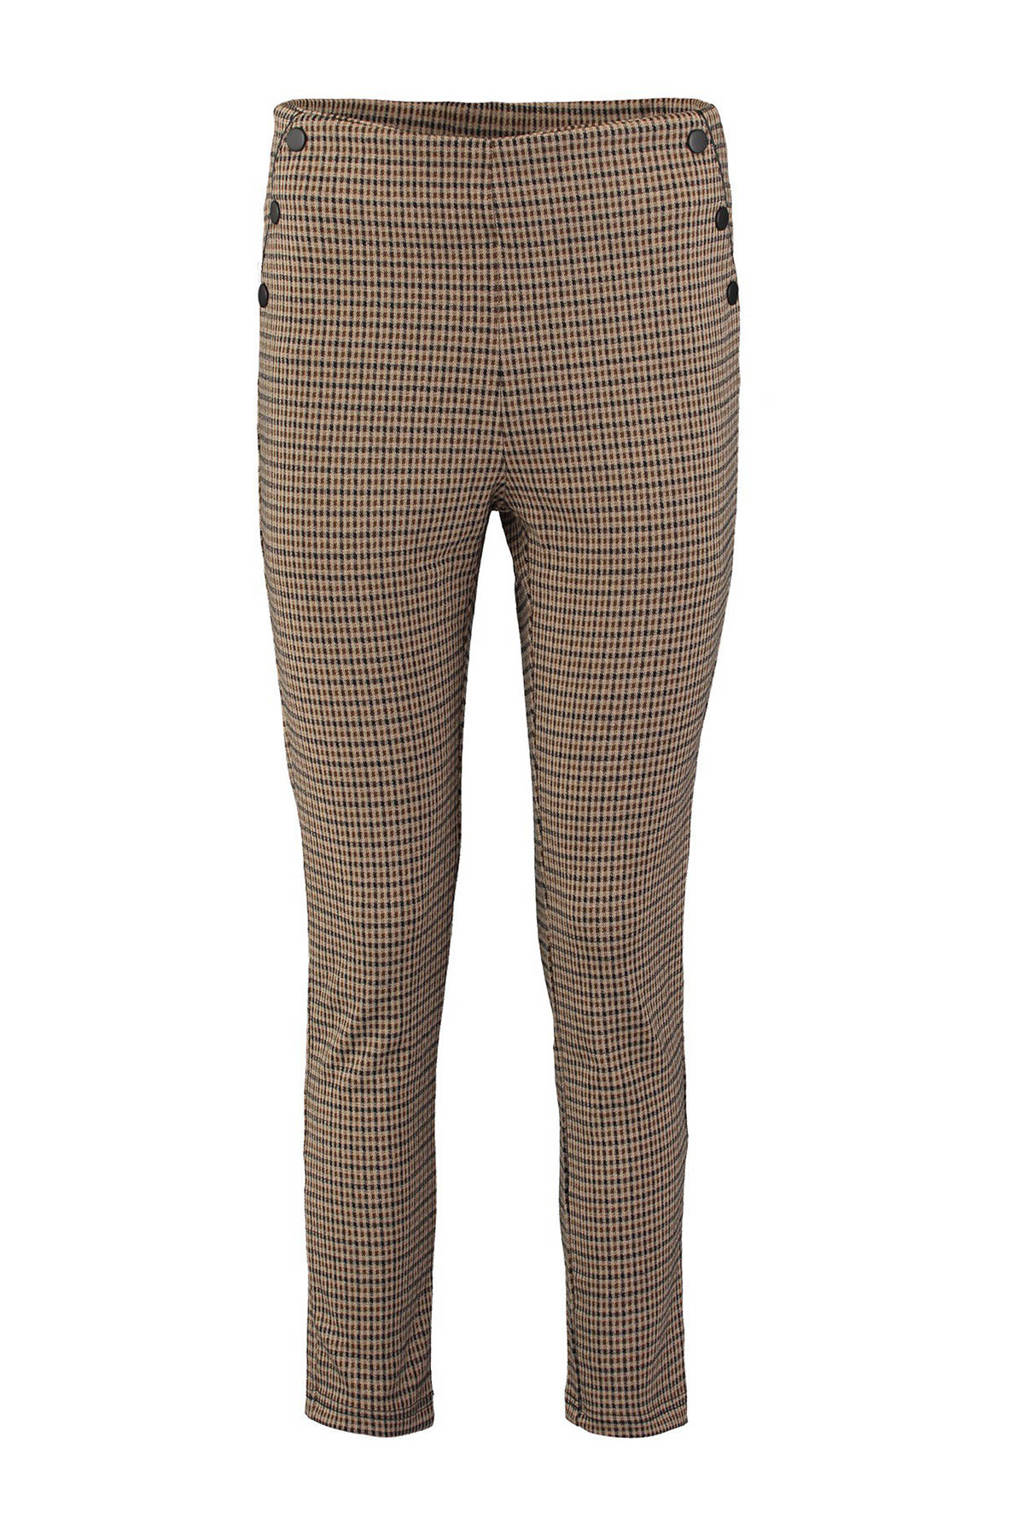 Bruine dames Hailys geruite high waist skinny legging Corin van polyester met elastische tailleband